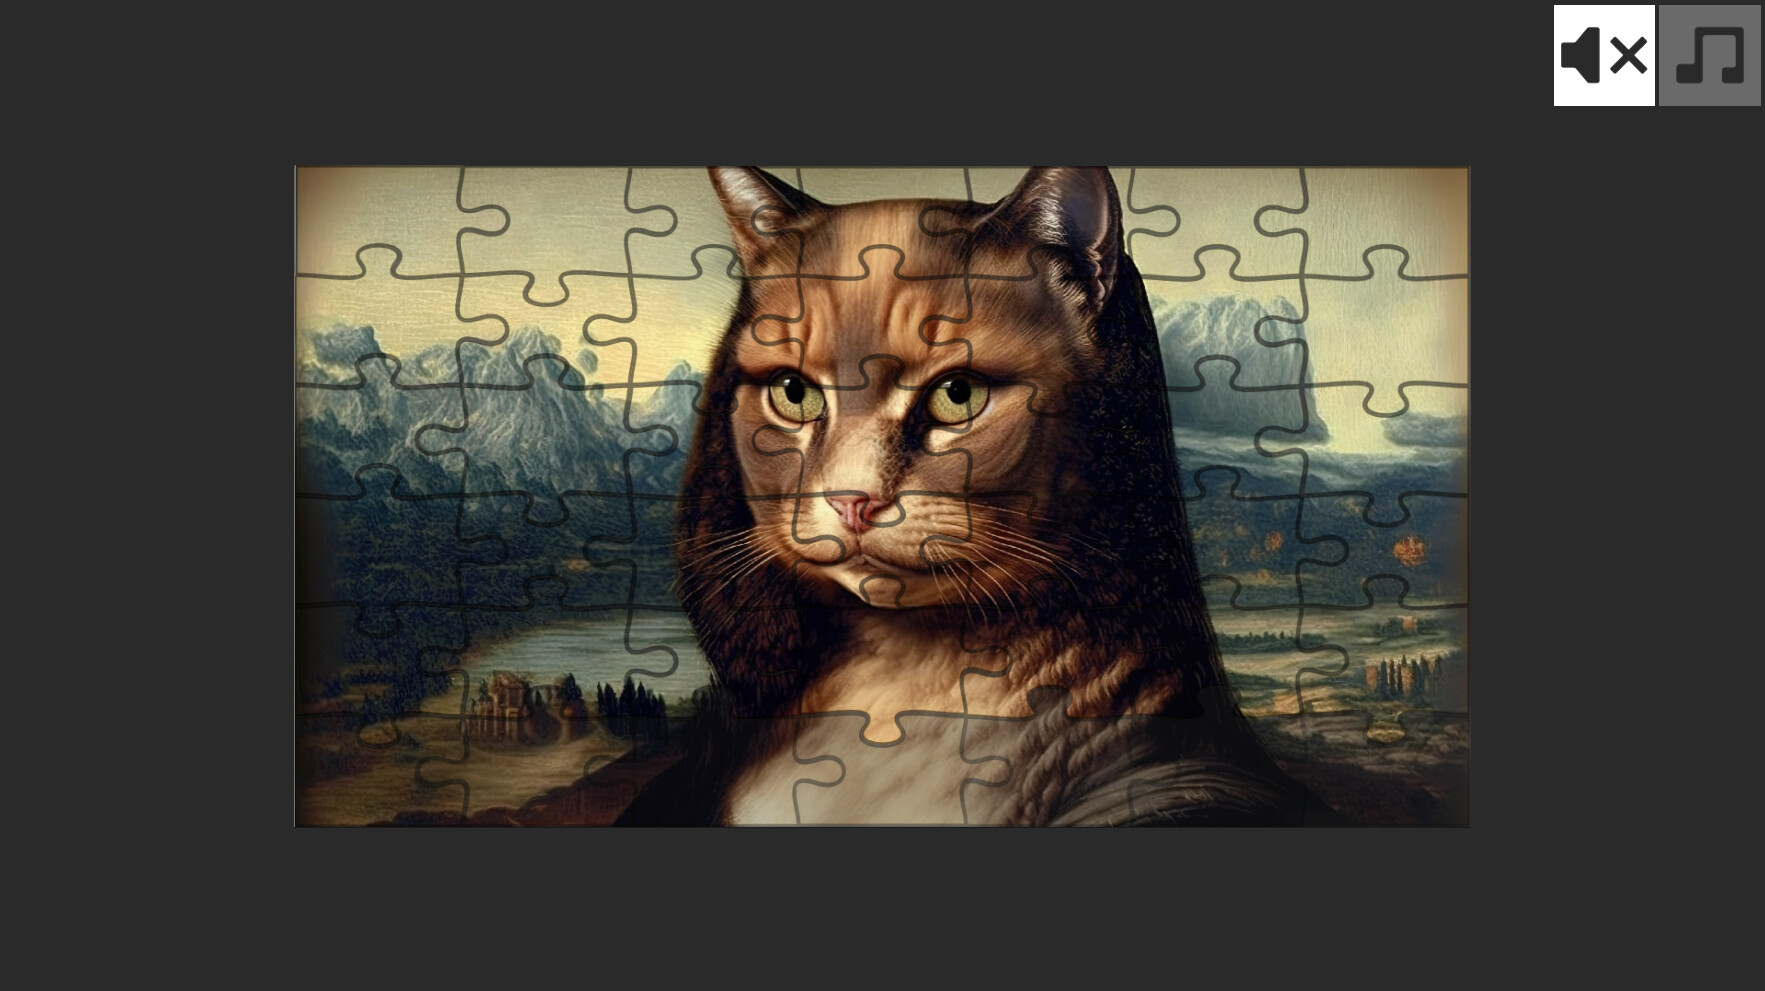 Hidden Shapes Animals - Jigsaw Puzzle Game, PC Steam Jogo